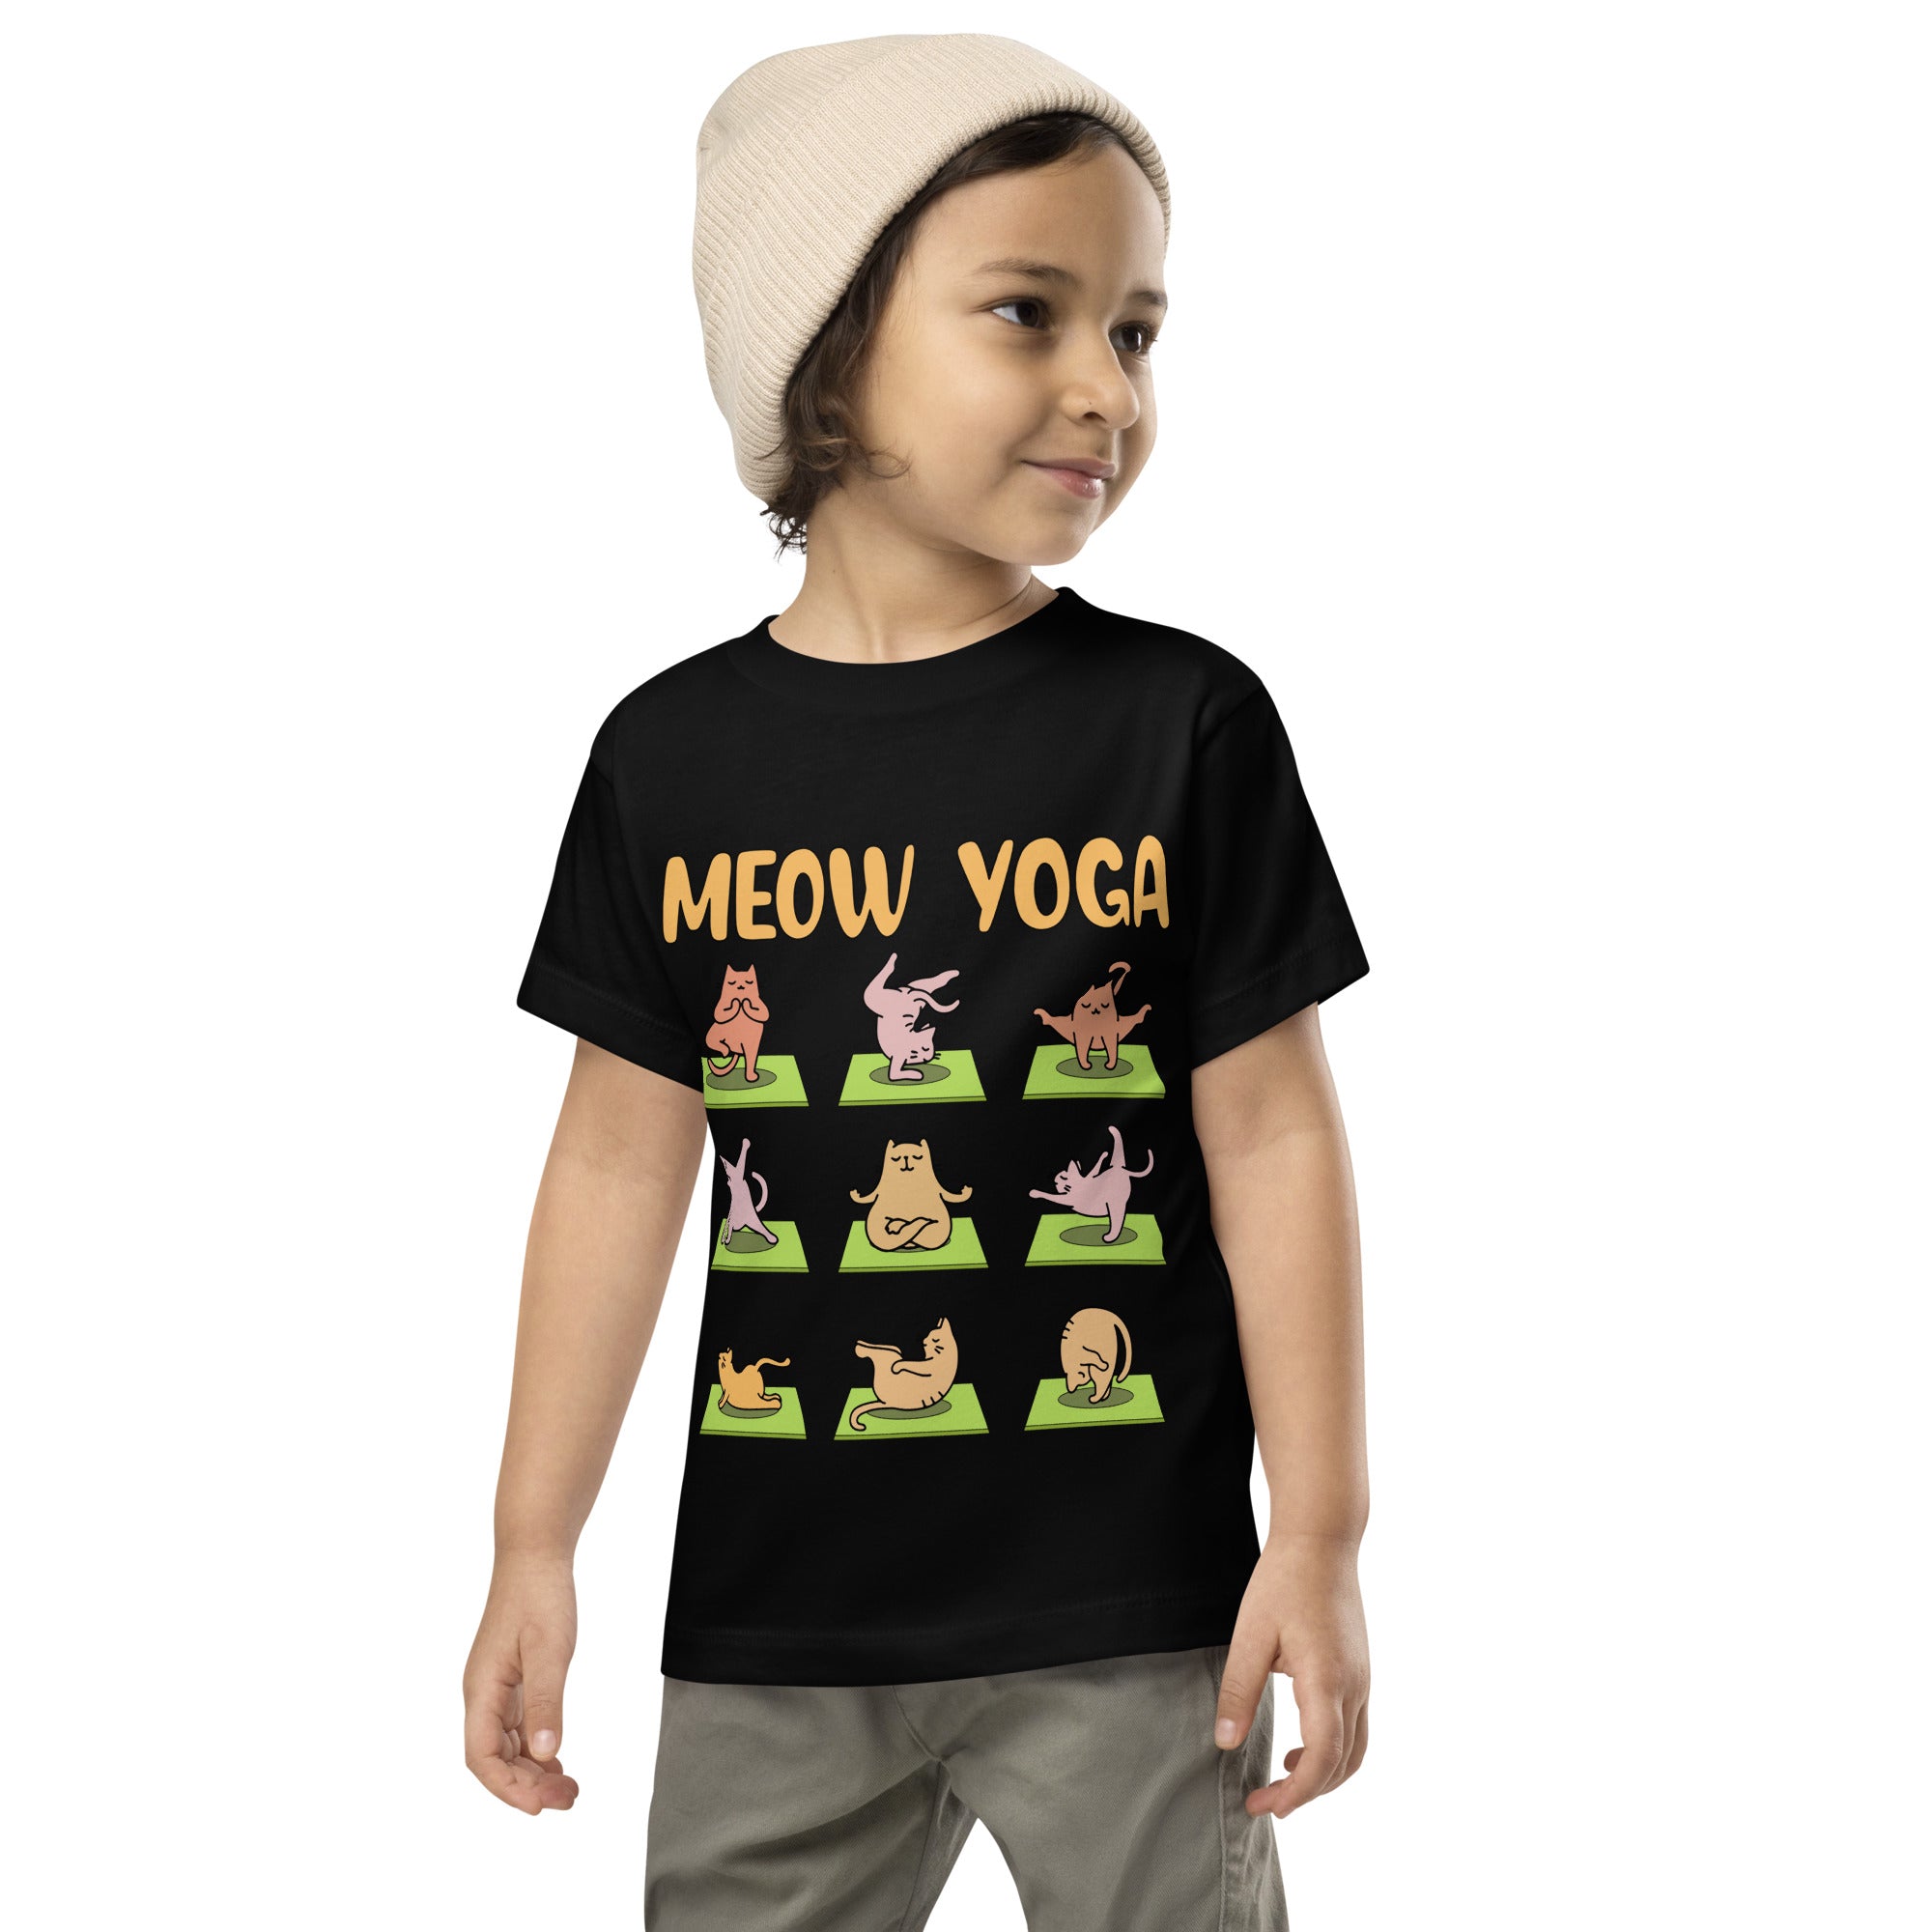 Meow Yoga Poses Kids T-Shirt